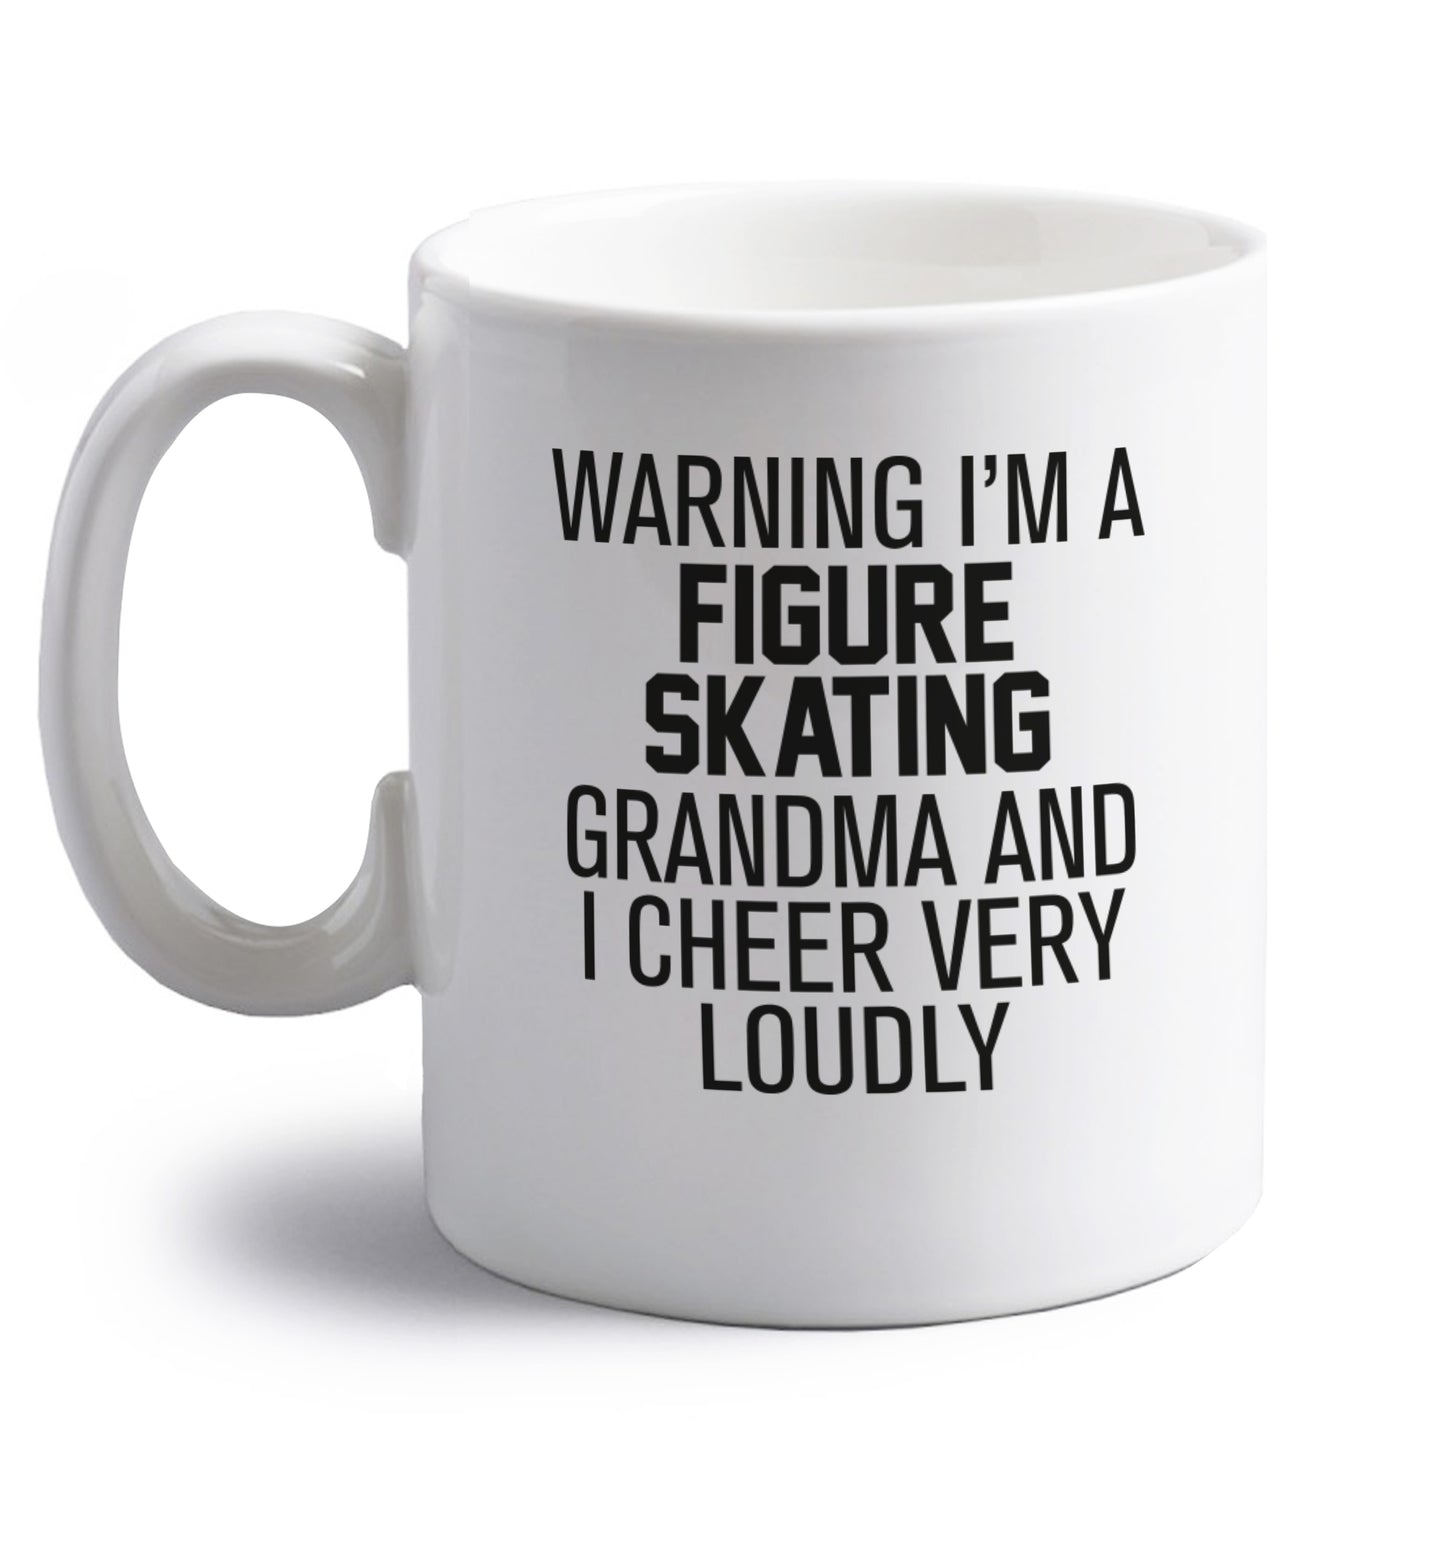 Warning I'm a figure skating grandma and I cheer very loudly right handed white ceramic mug 